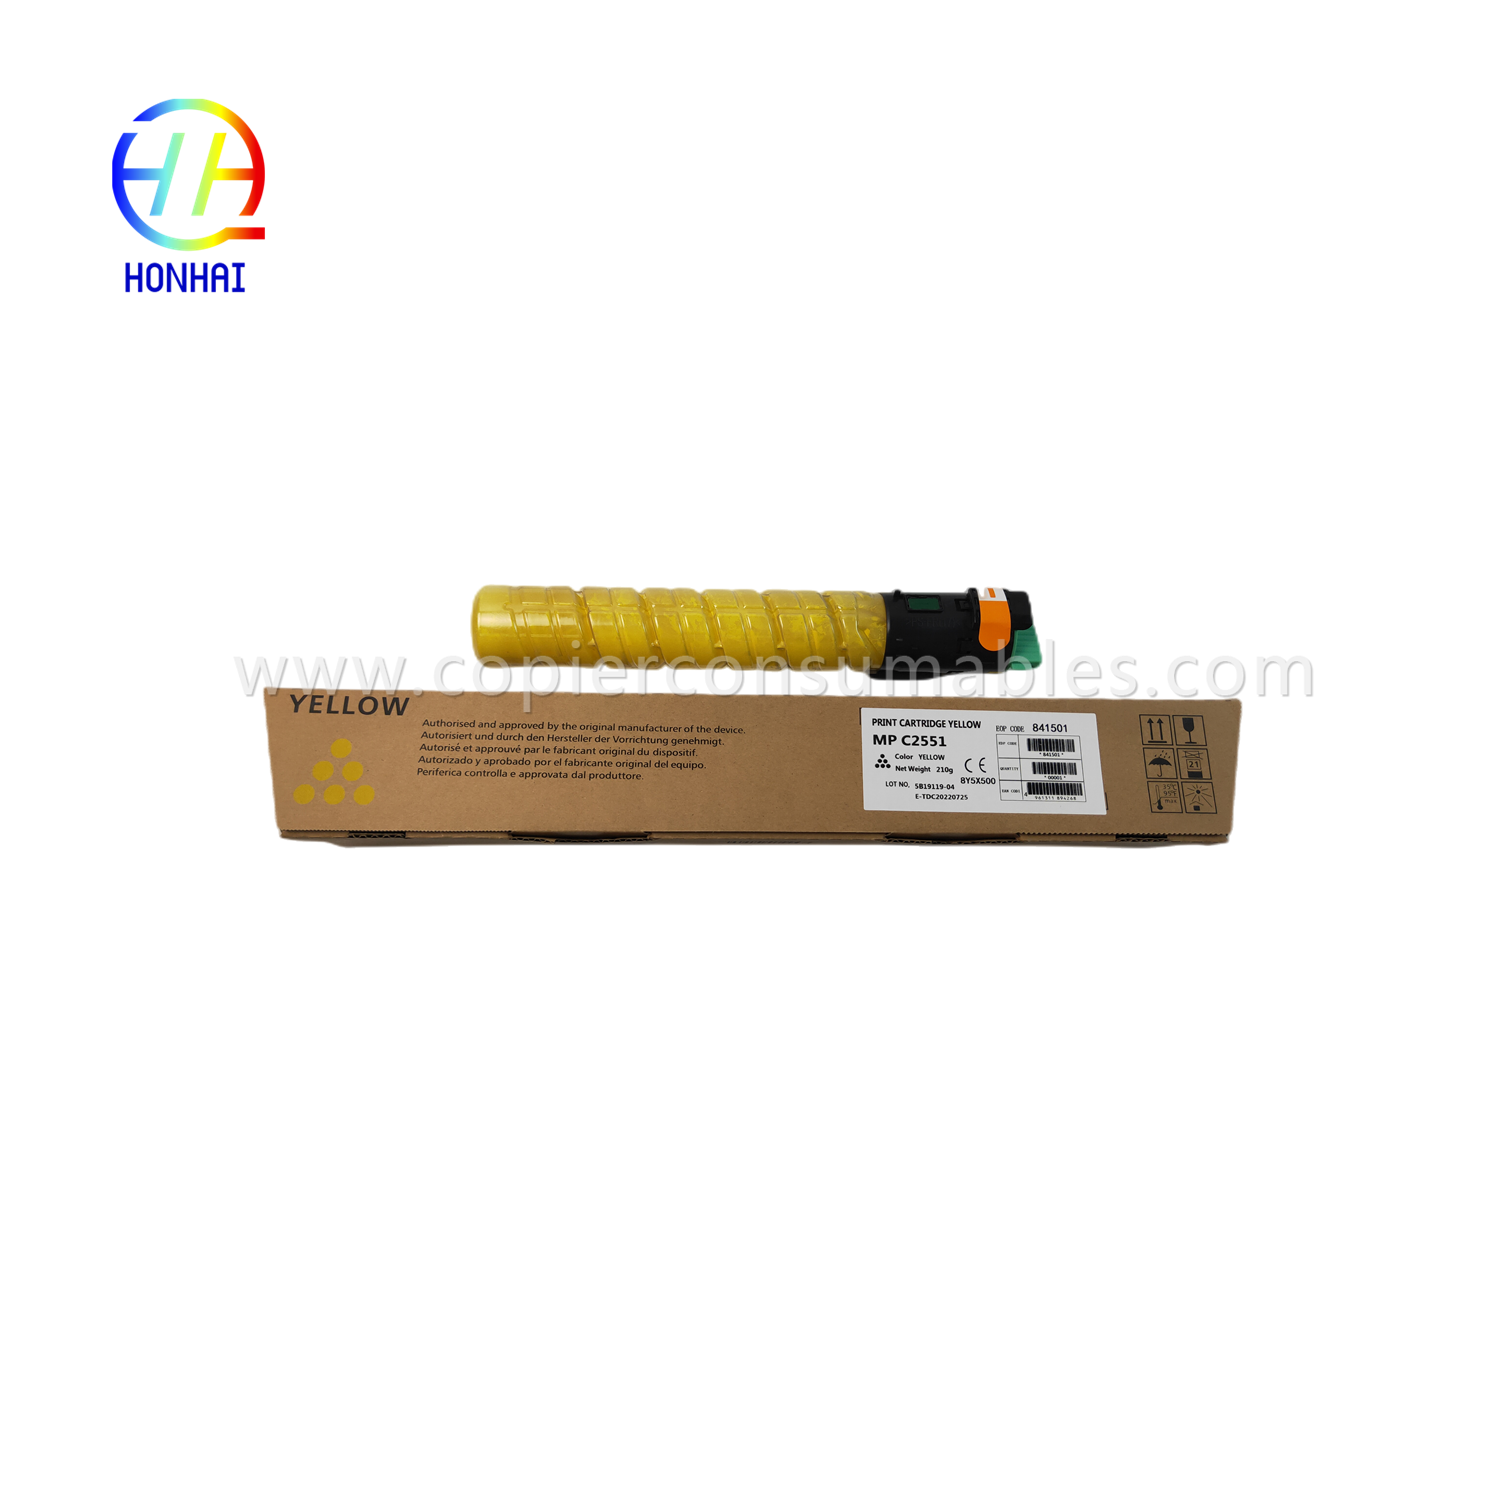 https://c585.goodao.net/toner-cartridge-kuning-for-ricoh-aficio-mpc2051-mpc2551-841501-product/